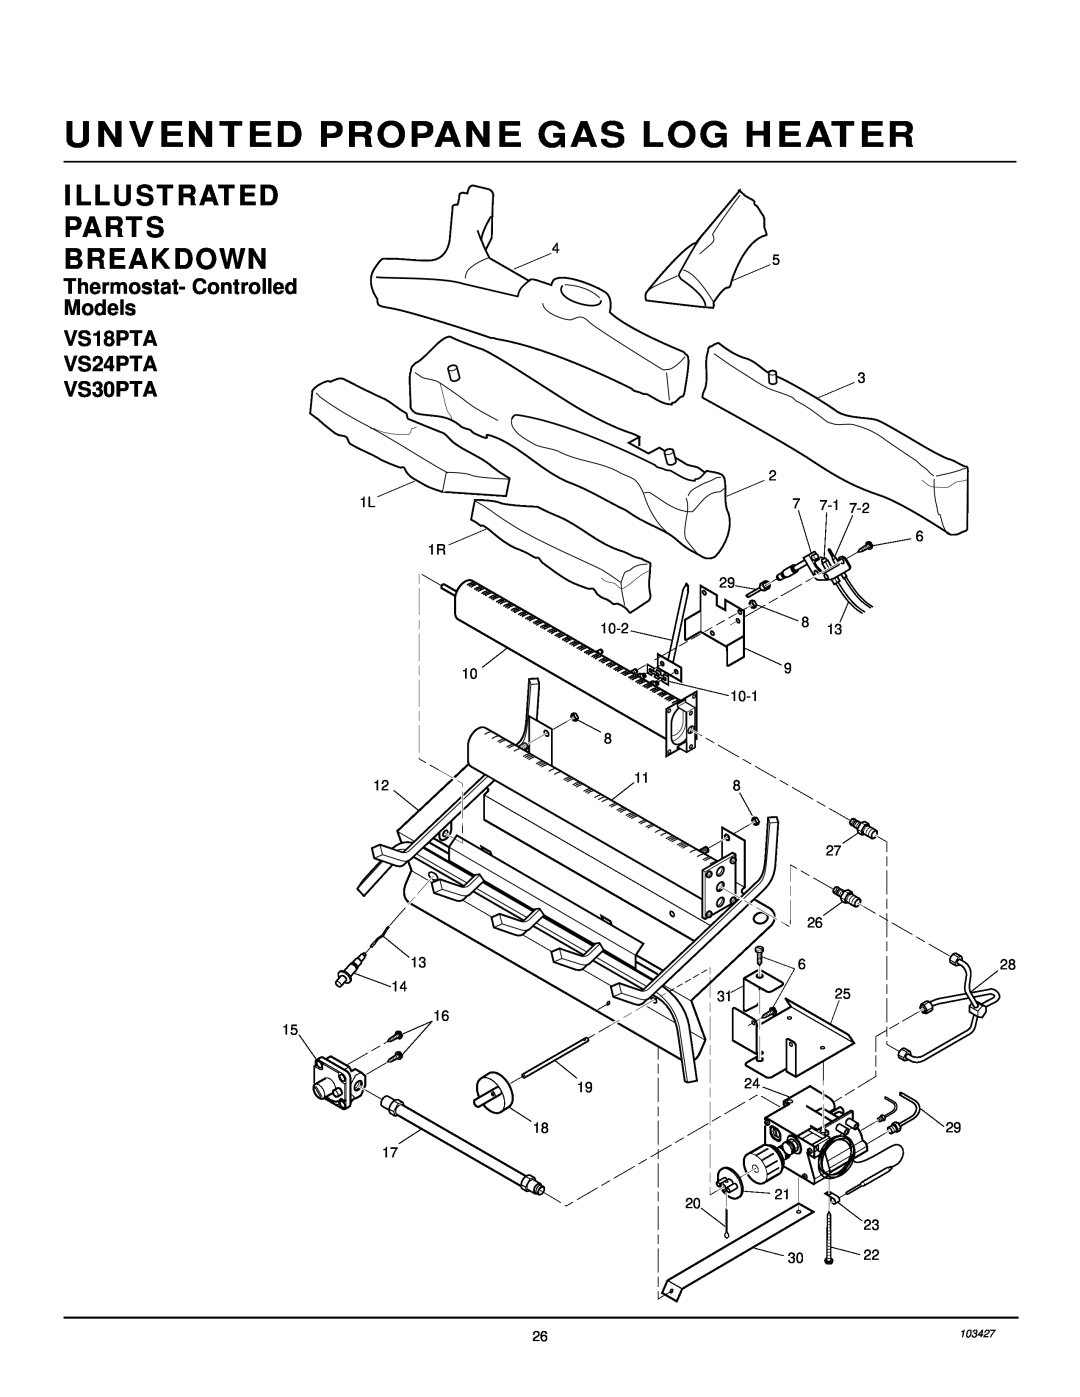 Desa Unvented Propane Gas Log Heater Model Split Oak and American Oak Design Illustrated Parts Breakdown, VS30PTA 